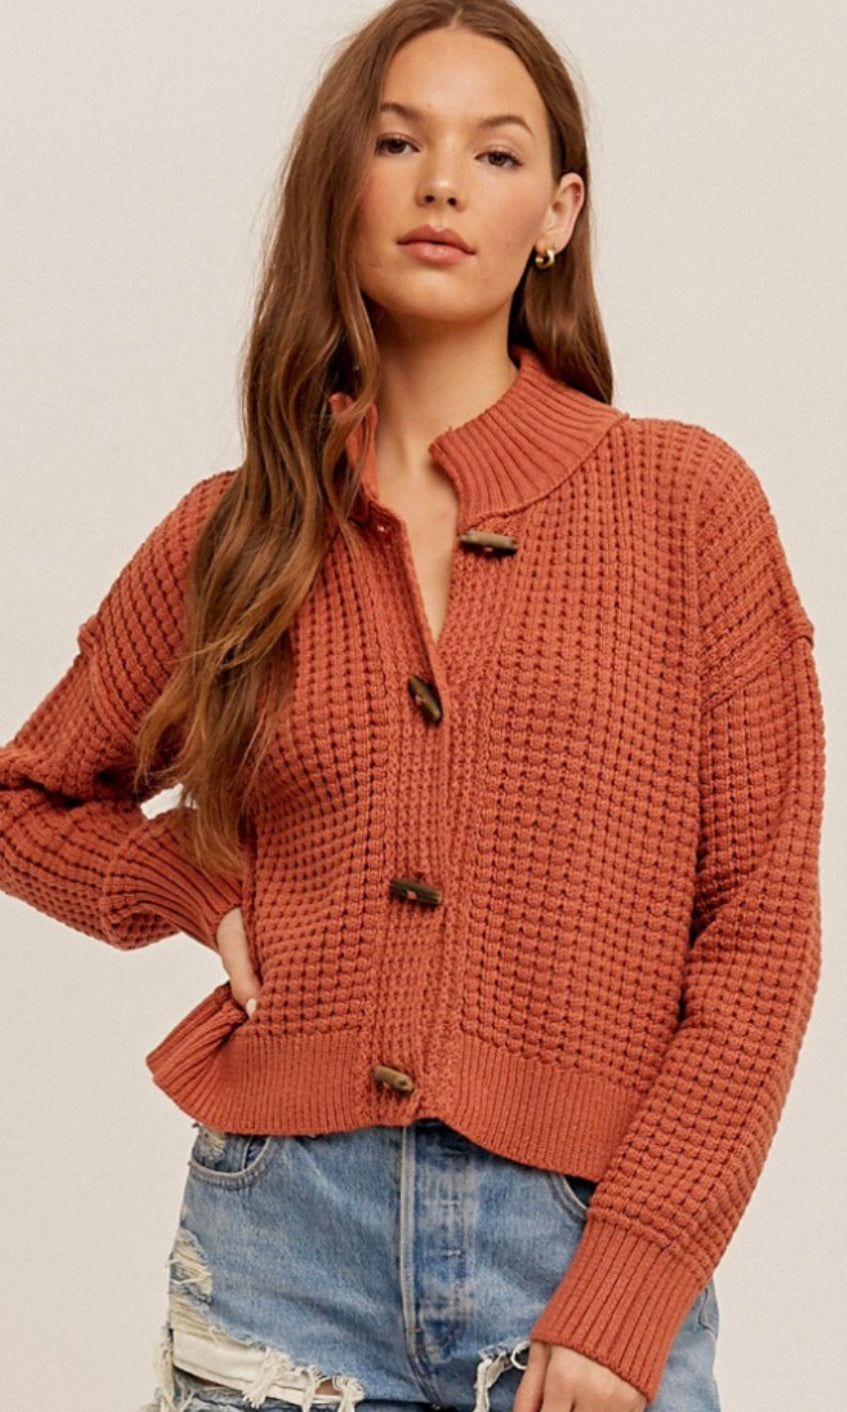 Ariea Rust Wooden Toggle Texture Cardigan Sweater Jacket